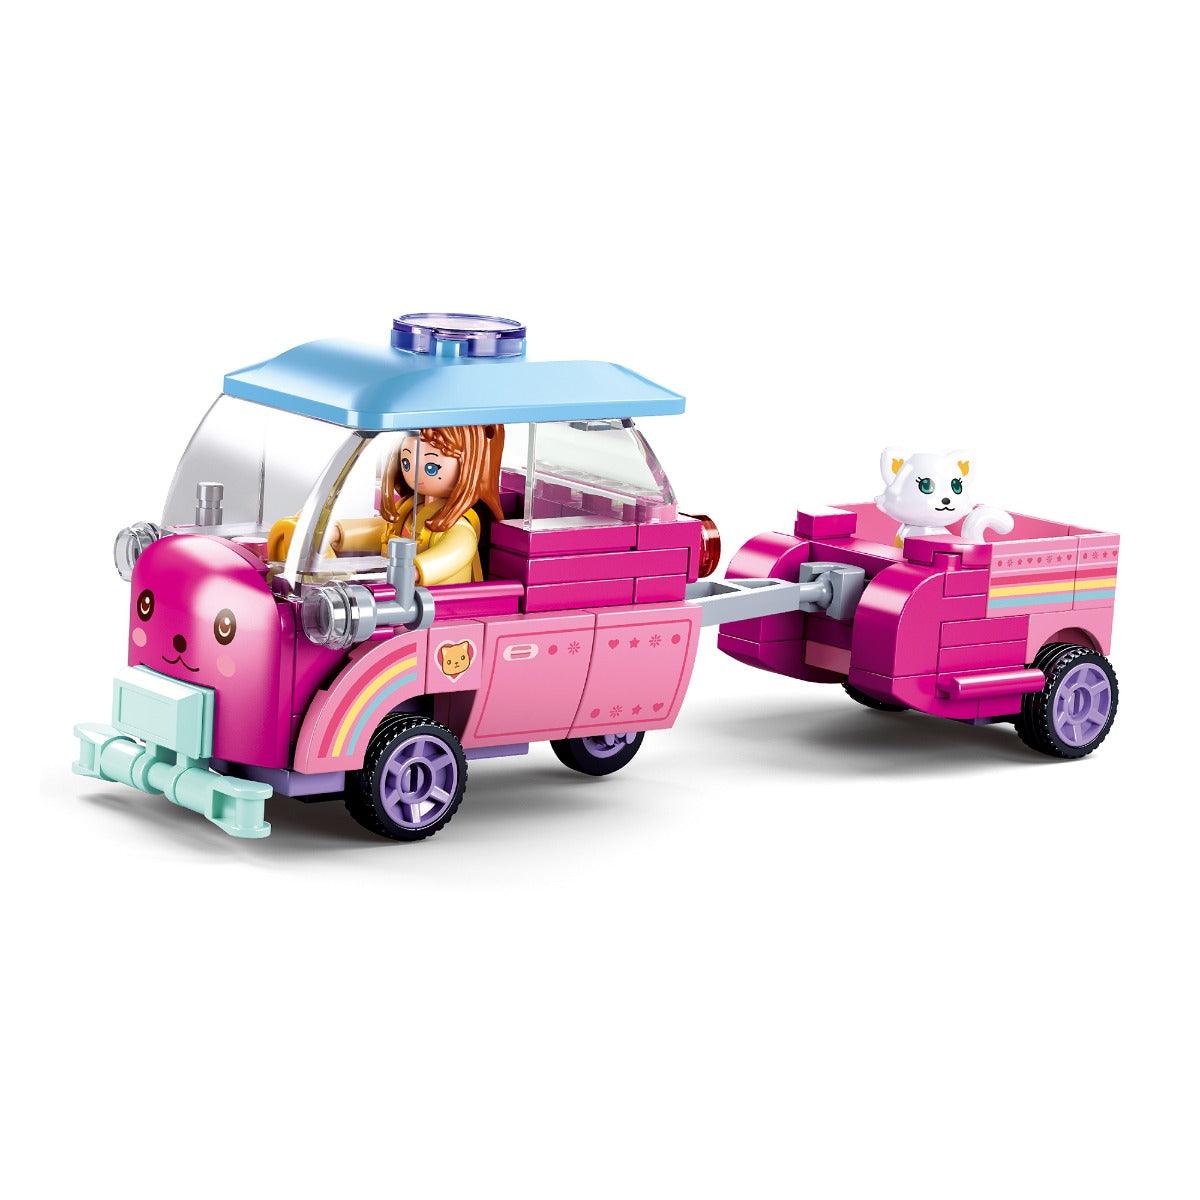 Sluban Girls Dream-Pet Car Building Blocks For Ages 6+